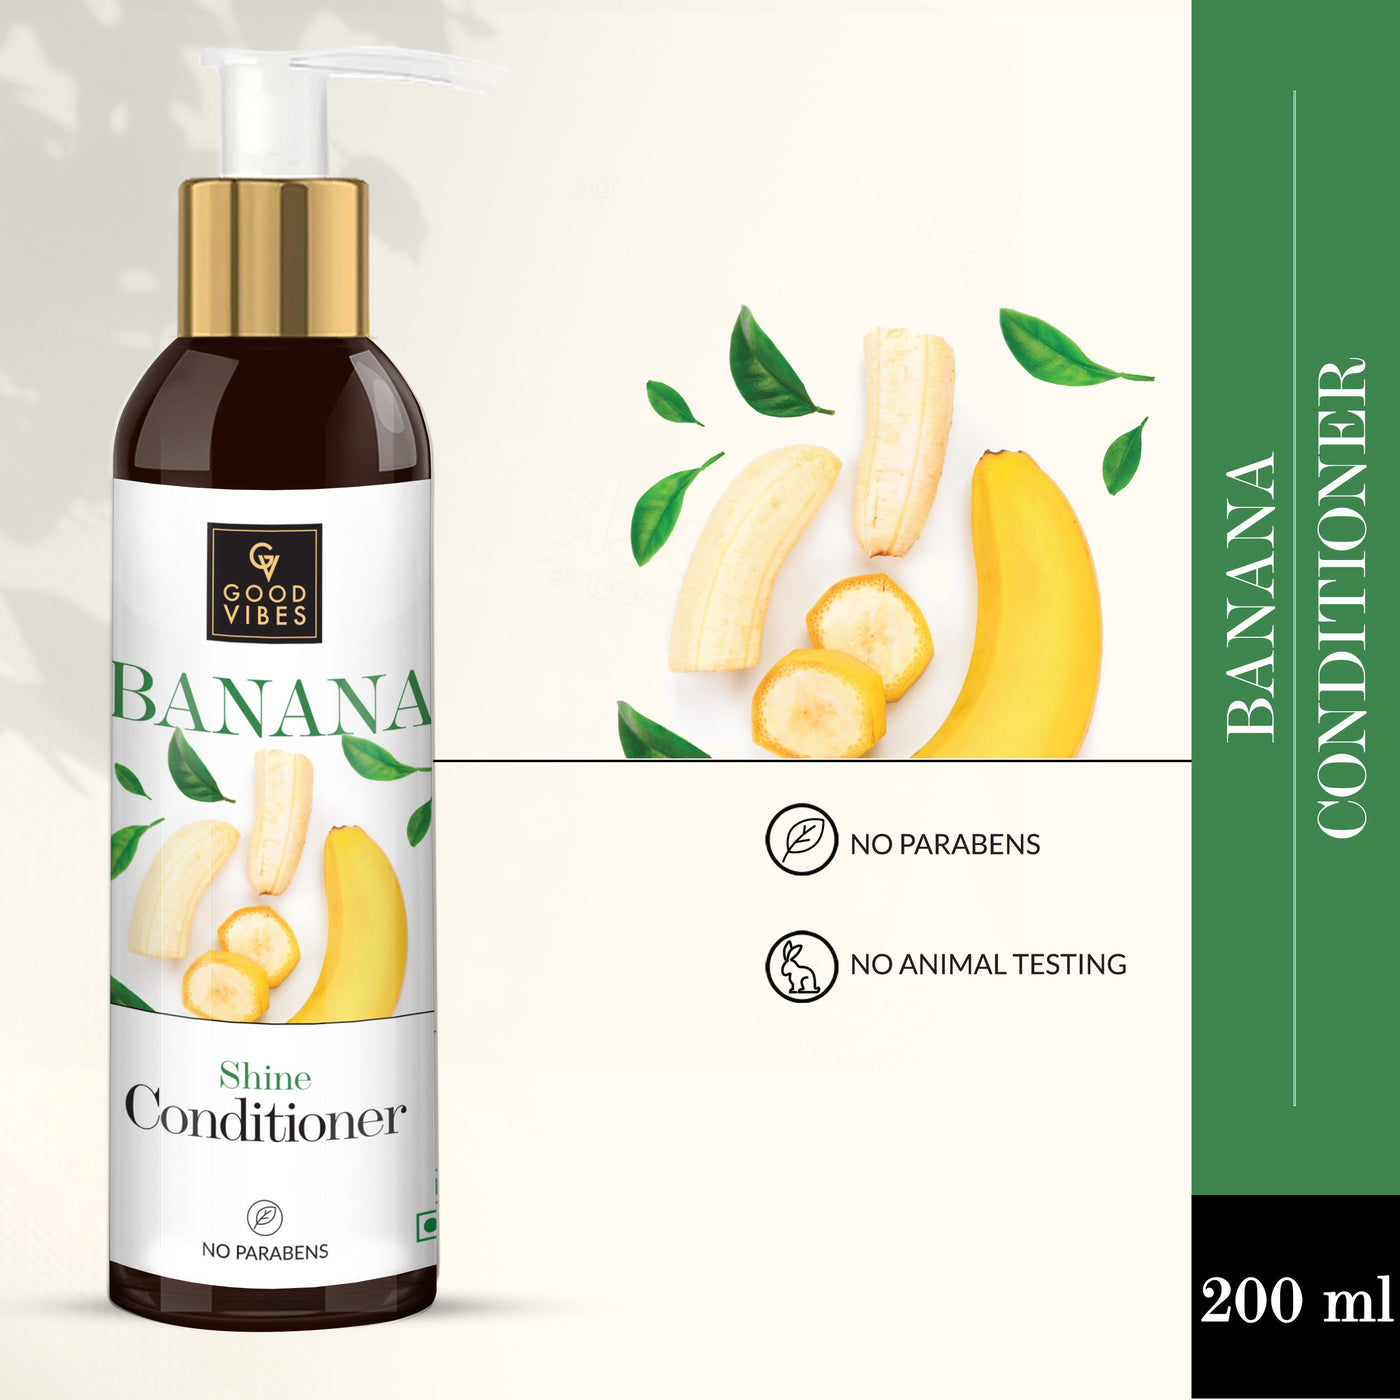 Good Vibes Banana Shine Conditioner (200 ml) - 1